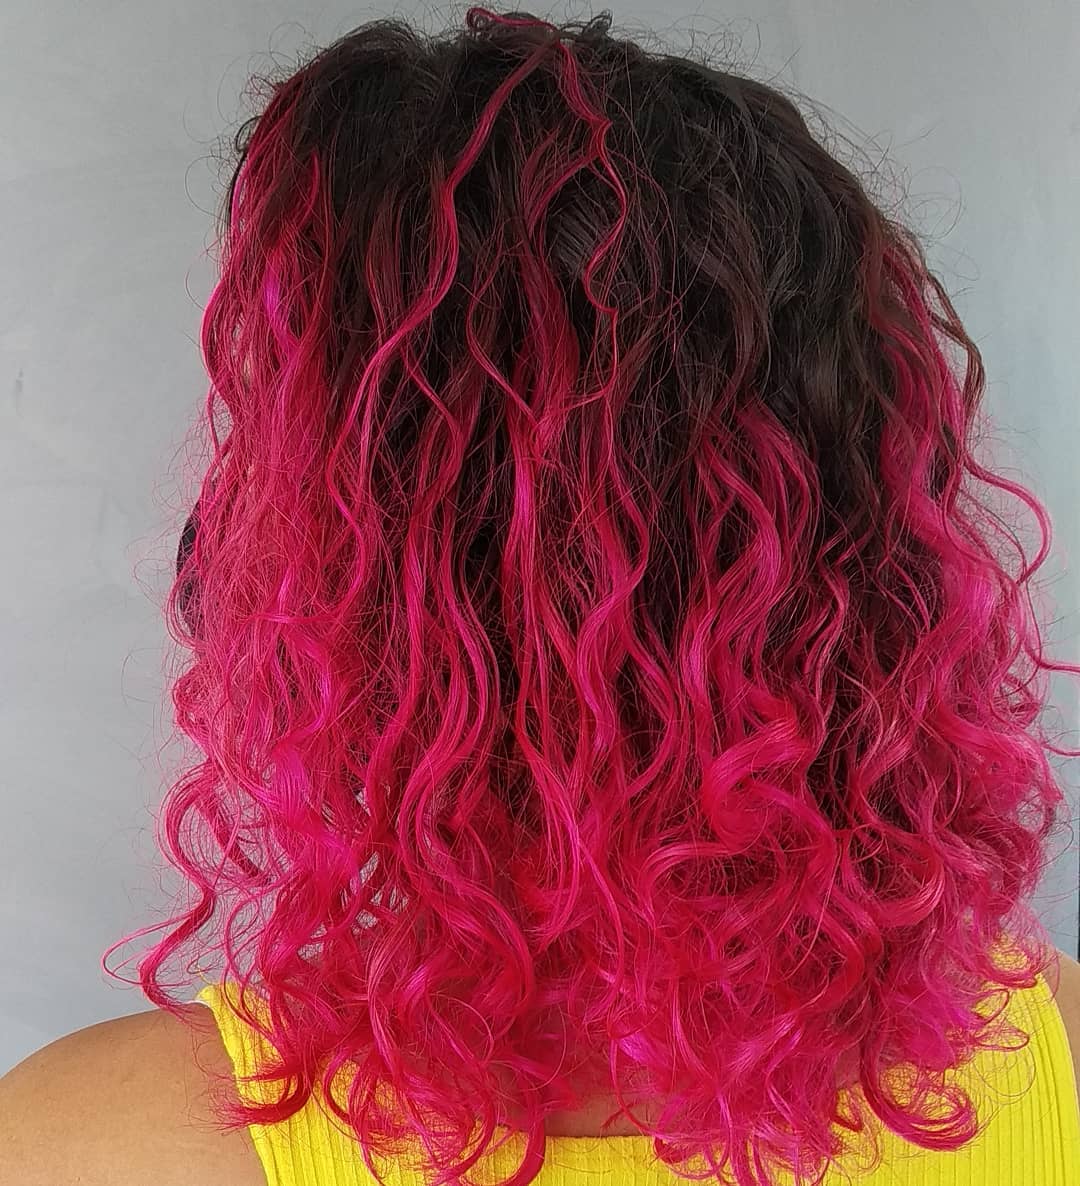 118695198 596486977708873 2908926429259158918 n - Ombré hair rosa: 60 inspirações, trends